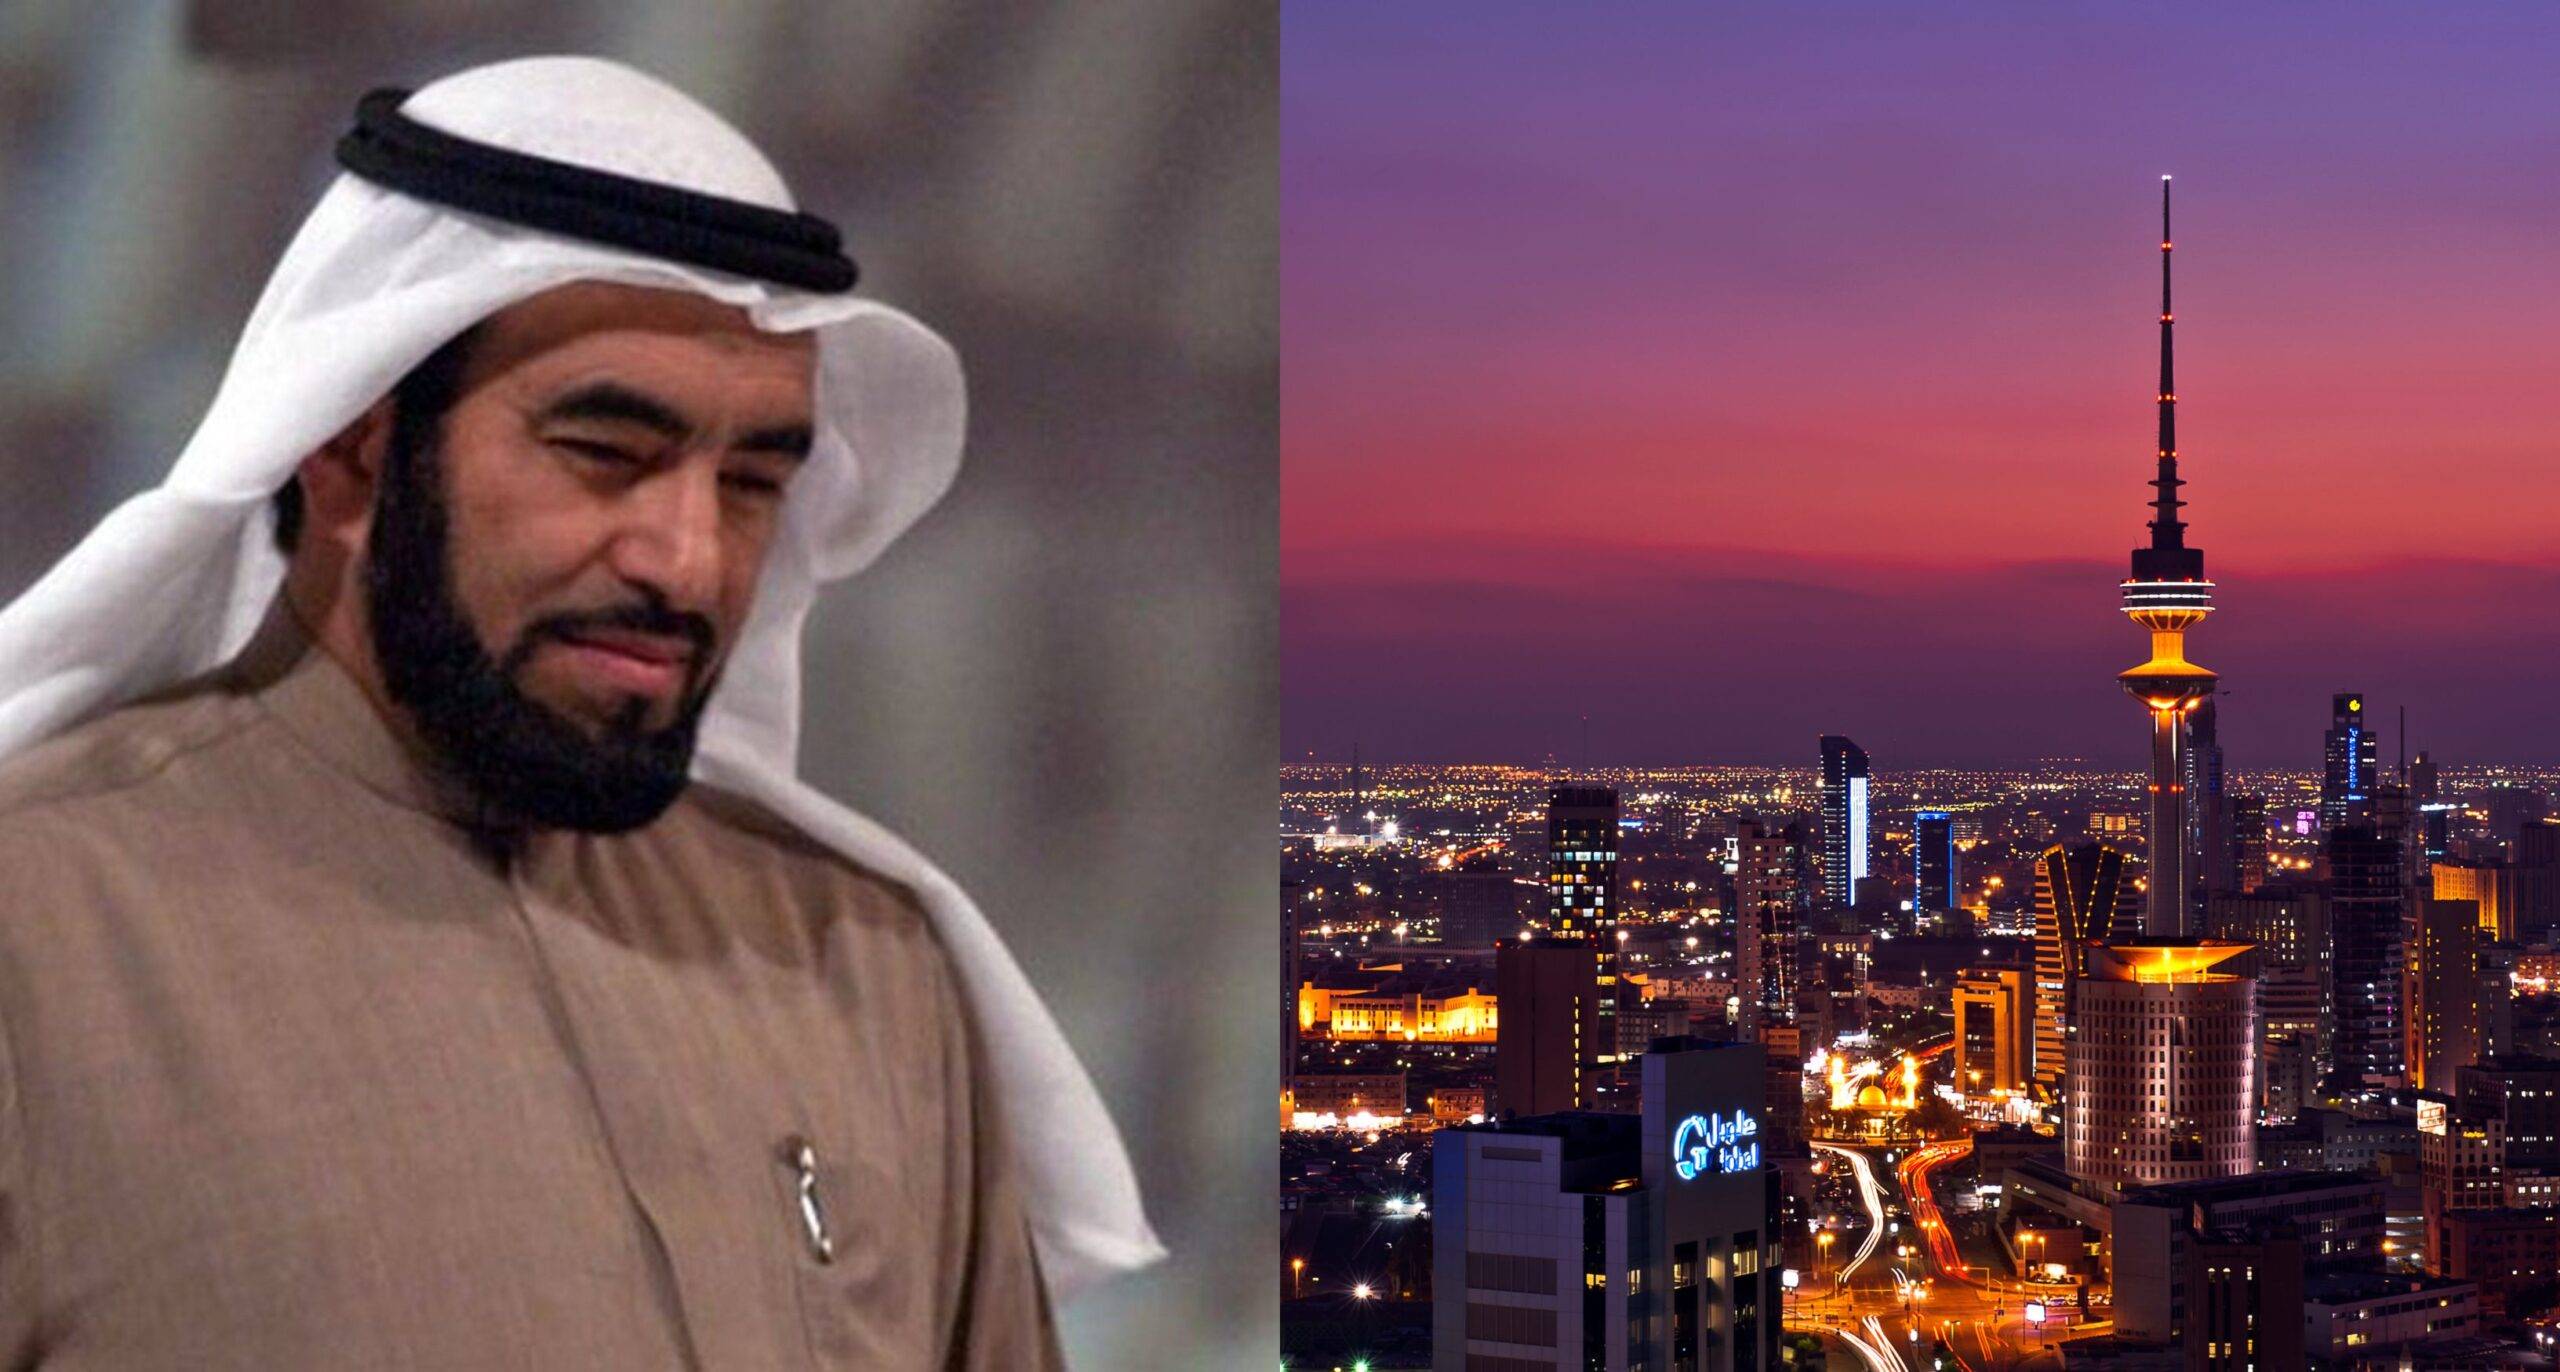 Kuwait to boycott All Companies Profiting From Arab Israel Ties